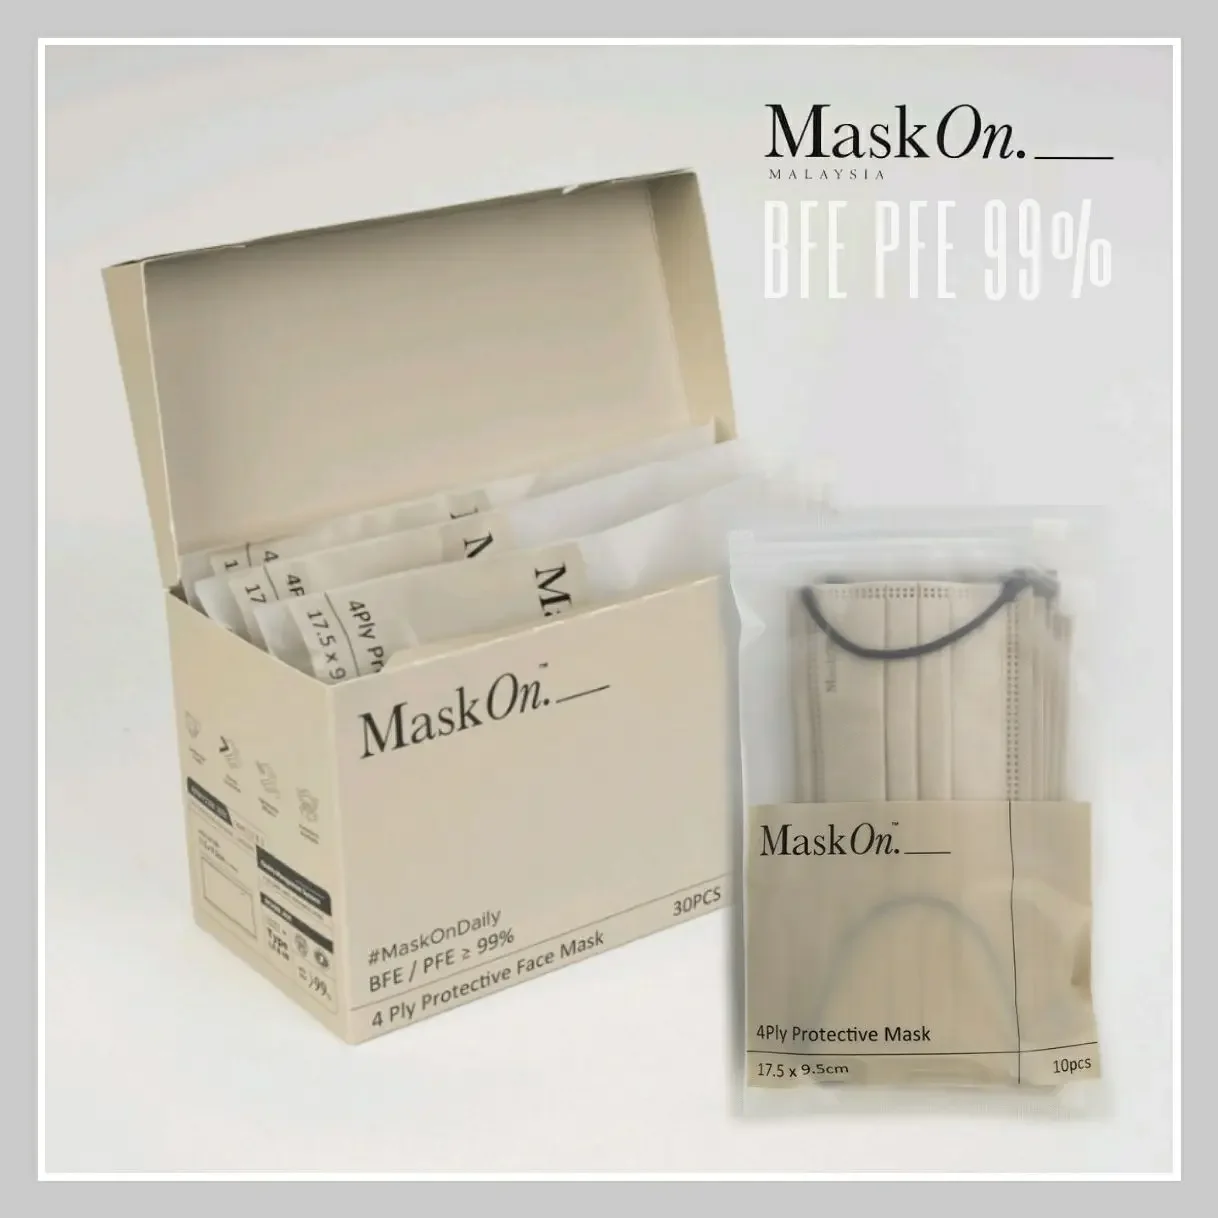 MaskOn Malaysia 医用外科口罩 4ply Camel Surgical Medical Face Mask BFE PFE 99% 30pcs / Box